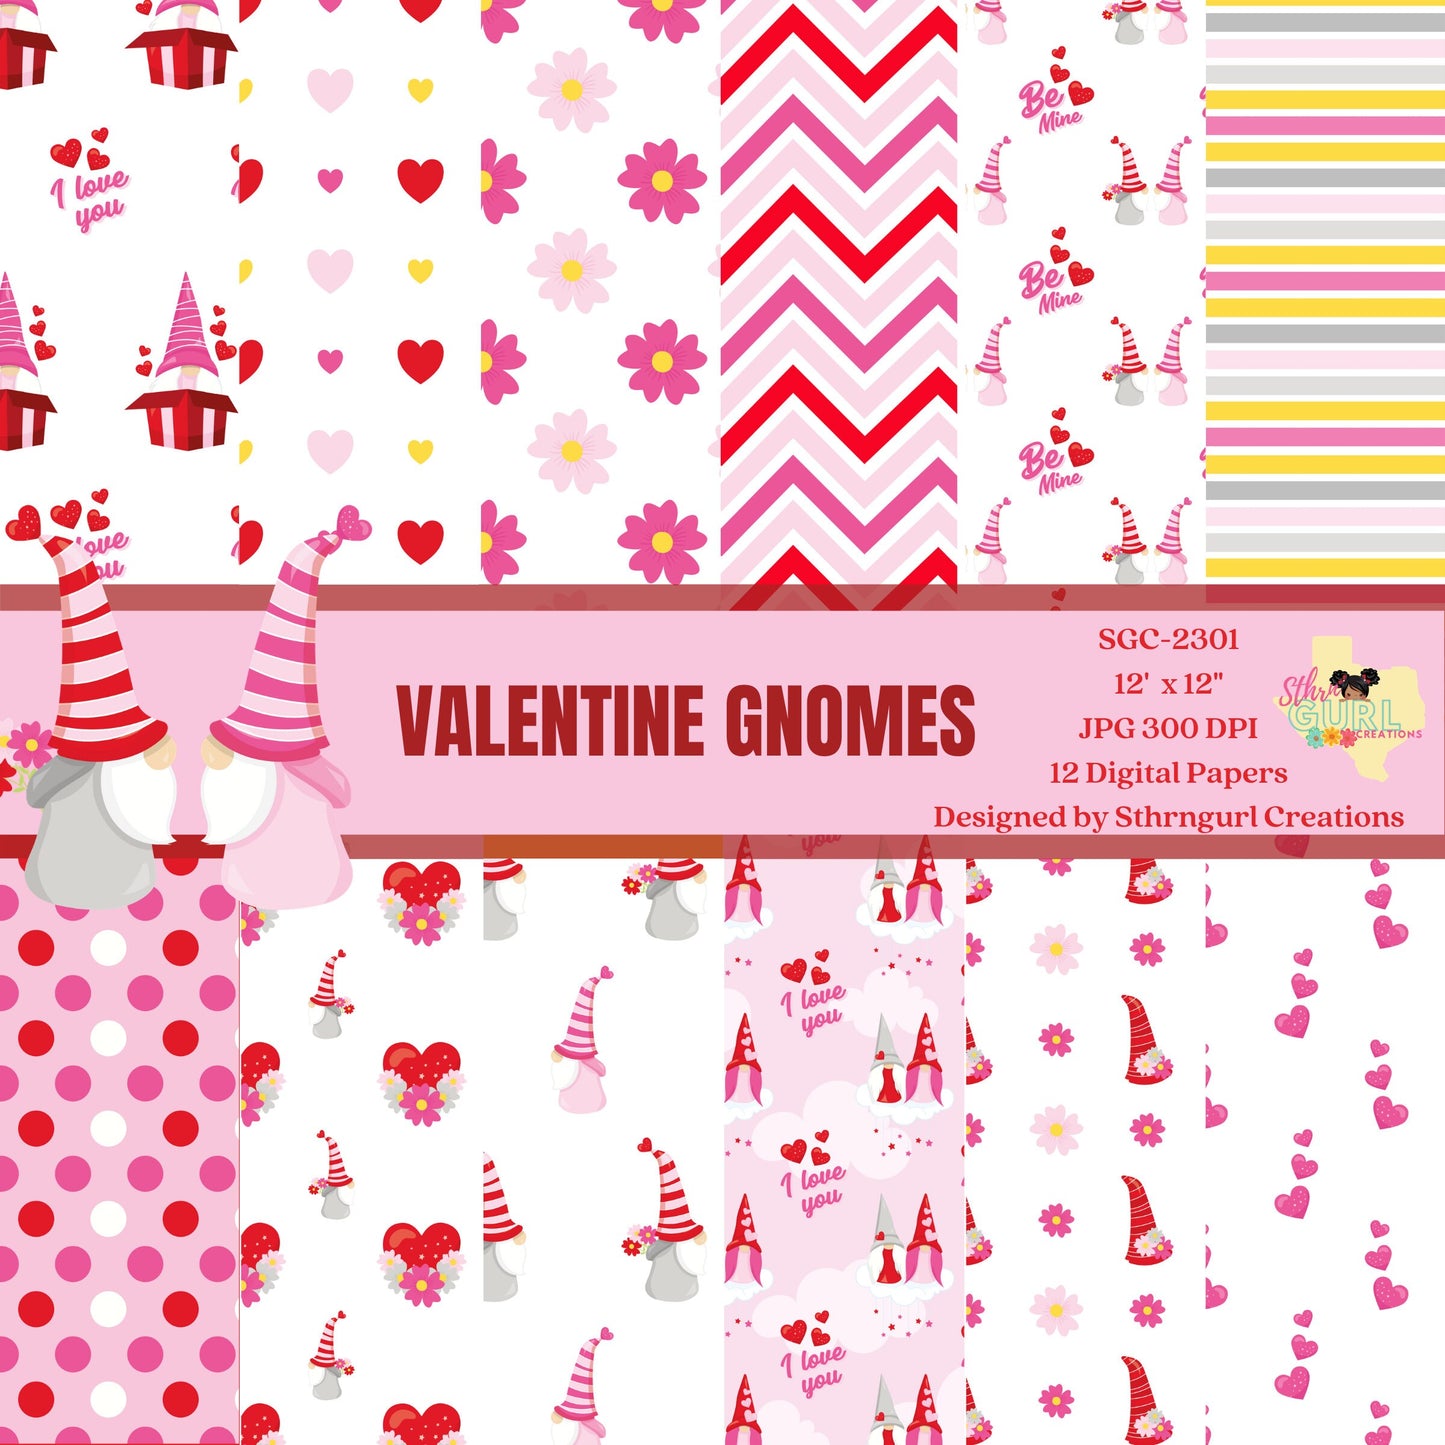 Valentine Digital Papers, Valentine Gnomes Digital Papers, Valentines Day Papers, Commercial Use, SGC-2301 - SthrngurlCreations